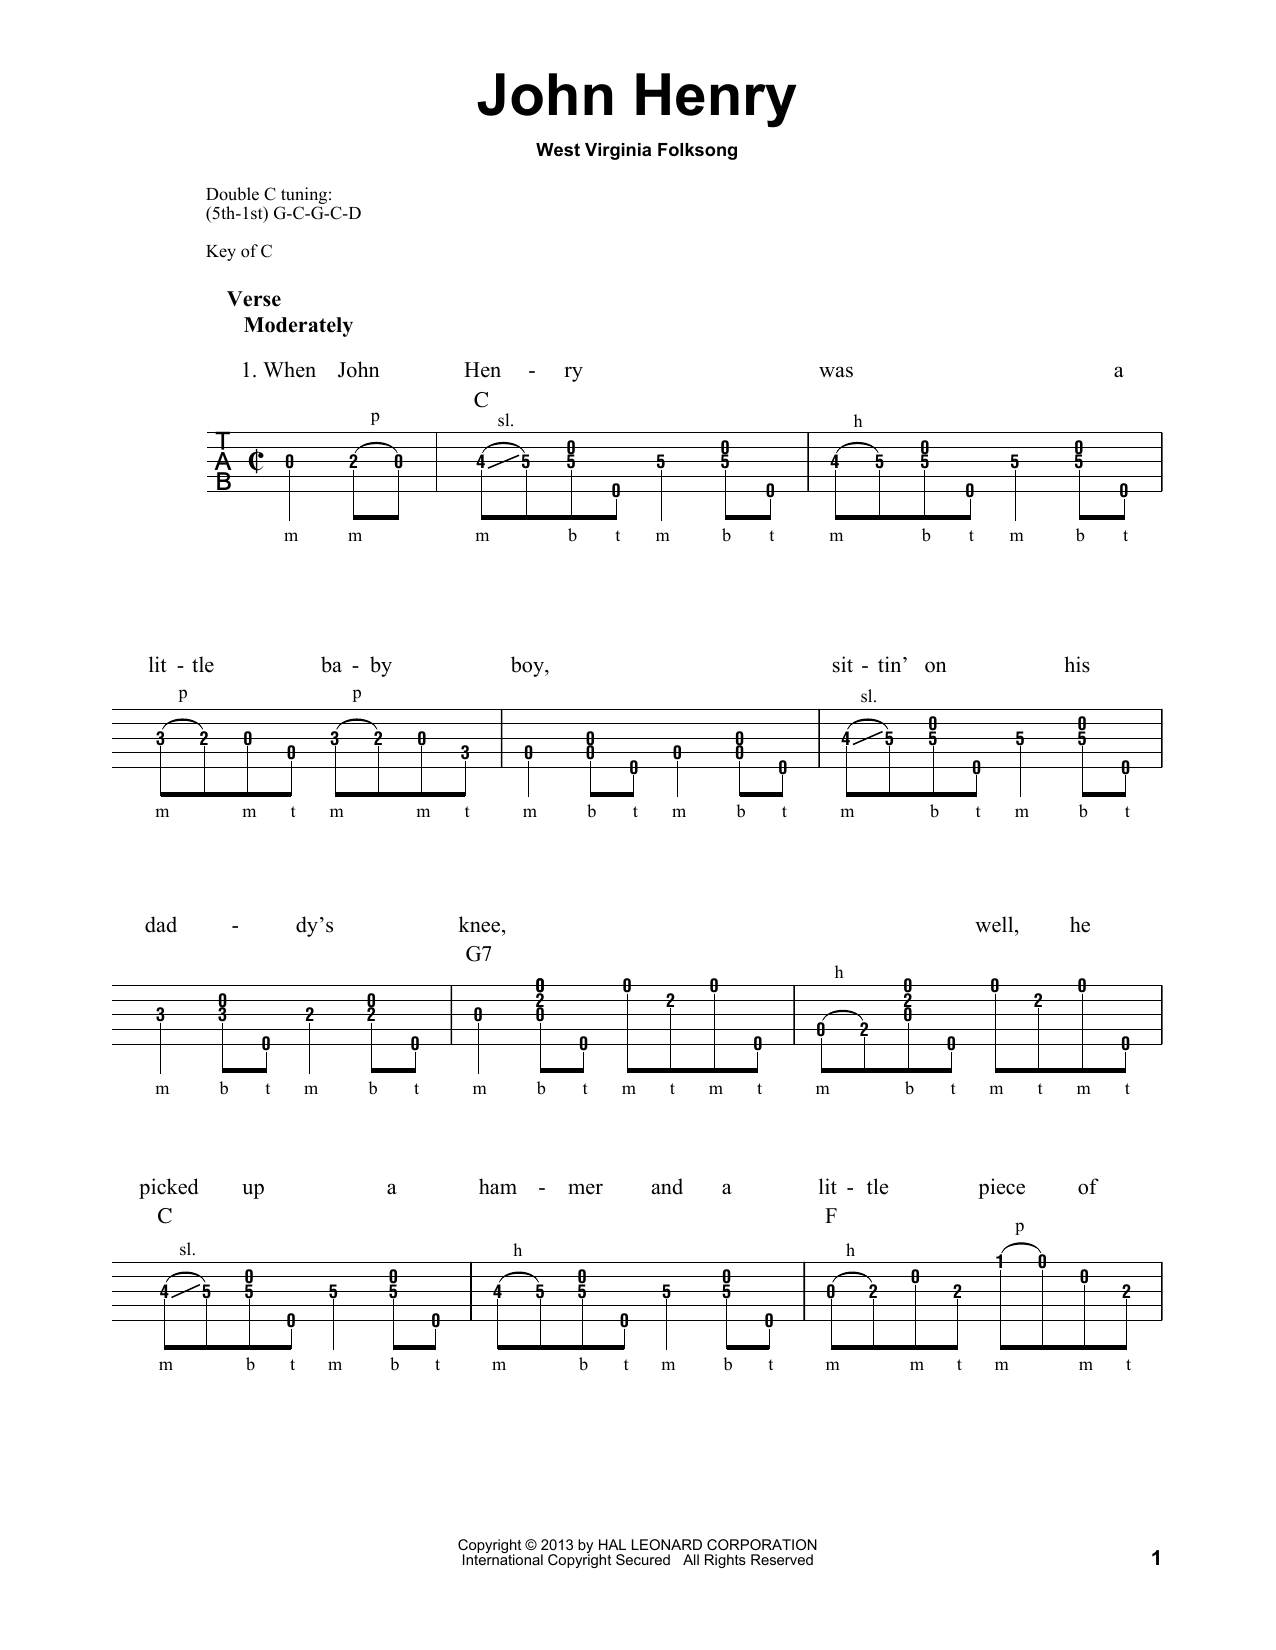 Michael Miles John Henry Sheet Music Notes & Chords for Banjo - Download or Print PDF